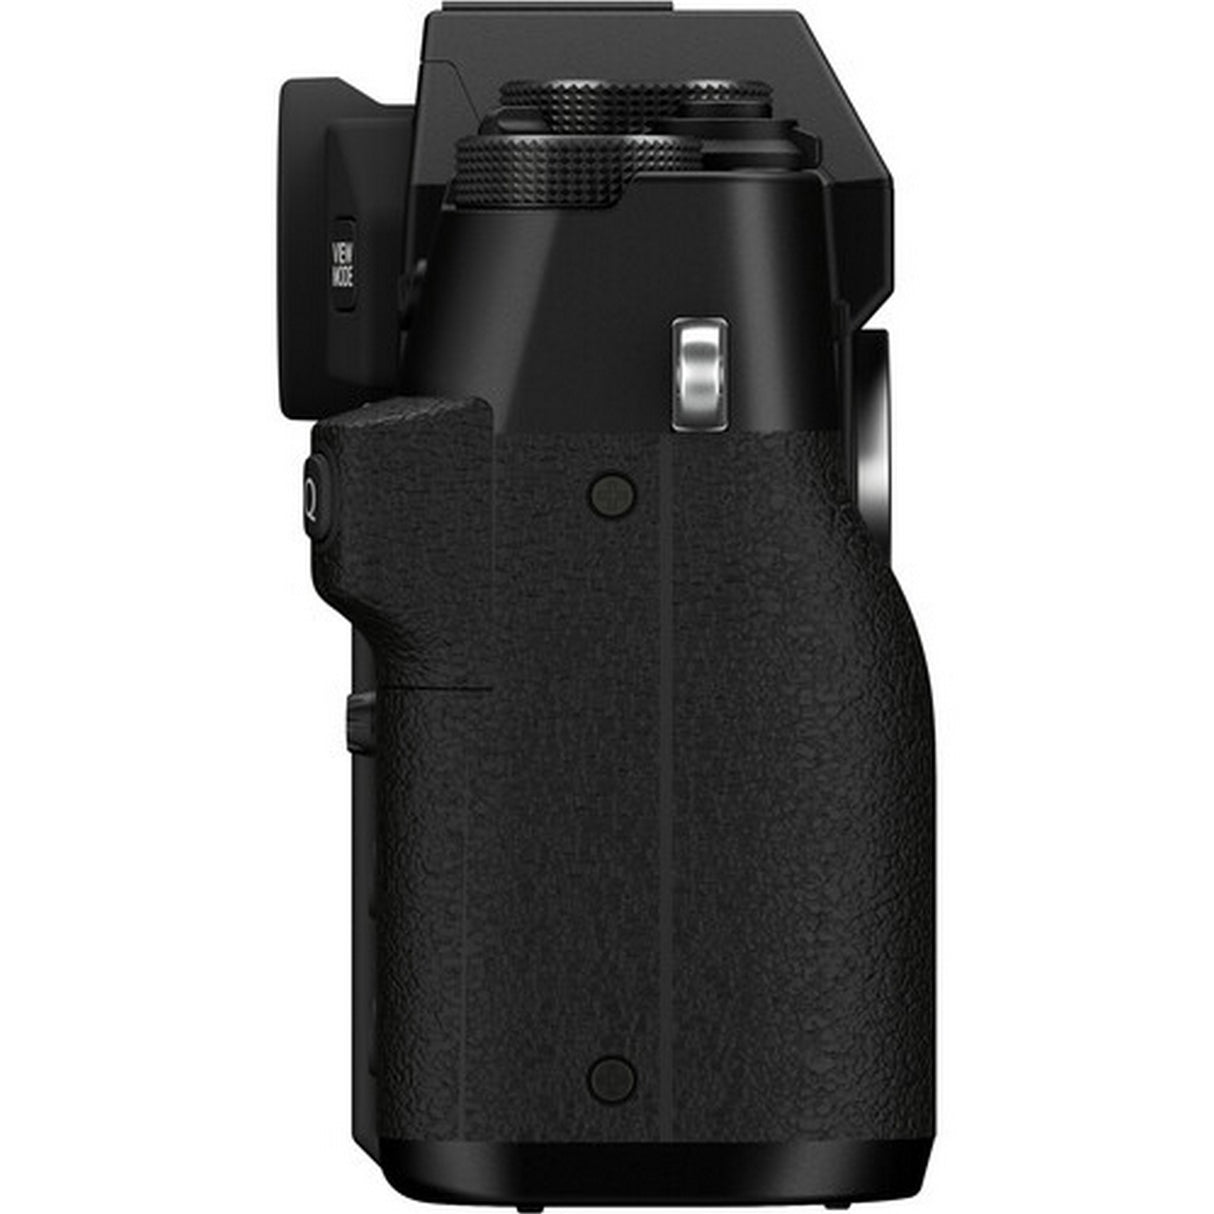 Fujifilm X-T30 II Mirrorless Camera with 18-55mm Lens, Black